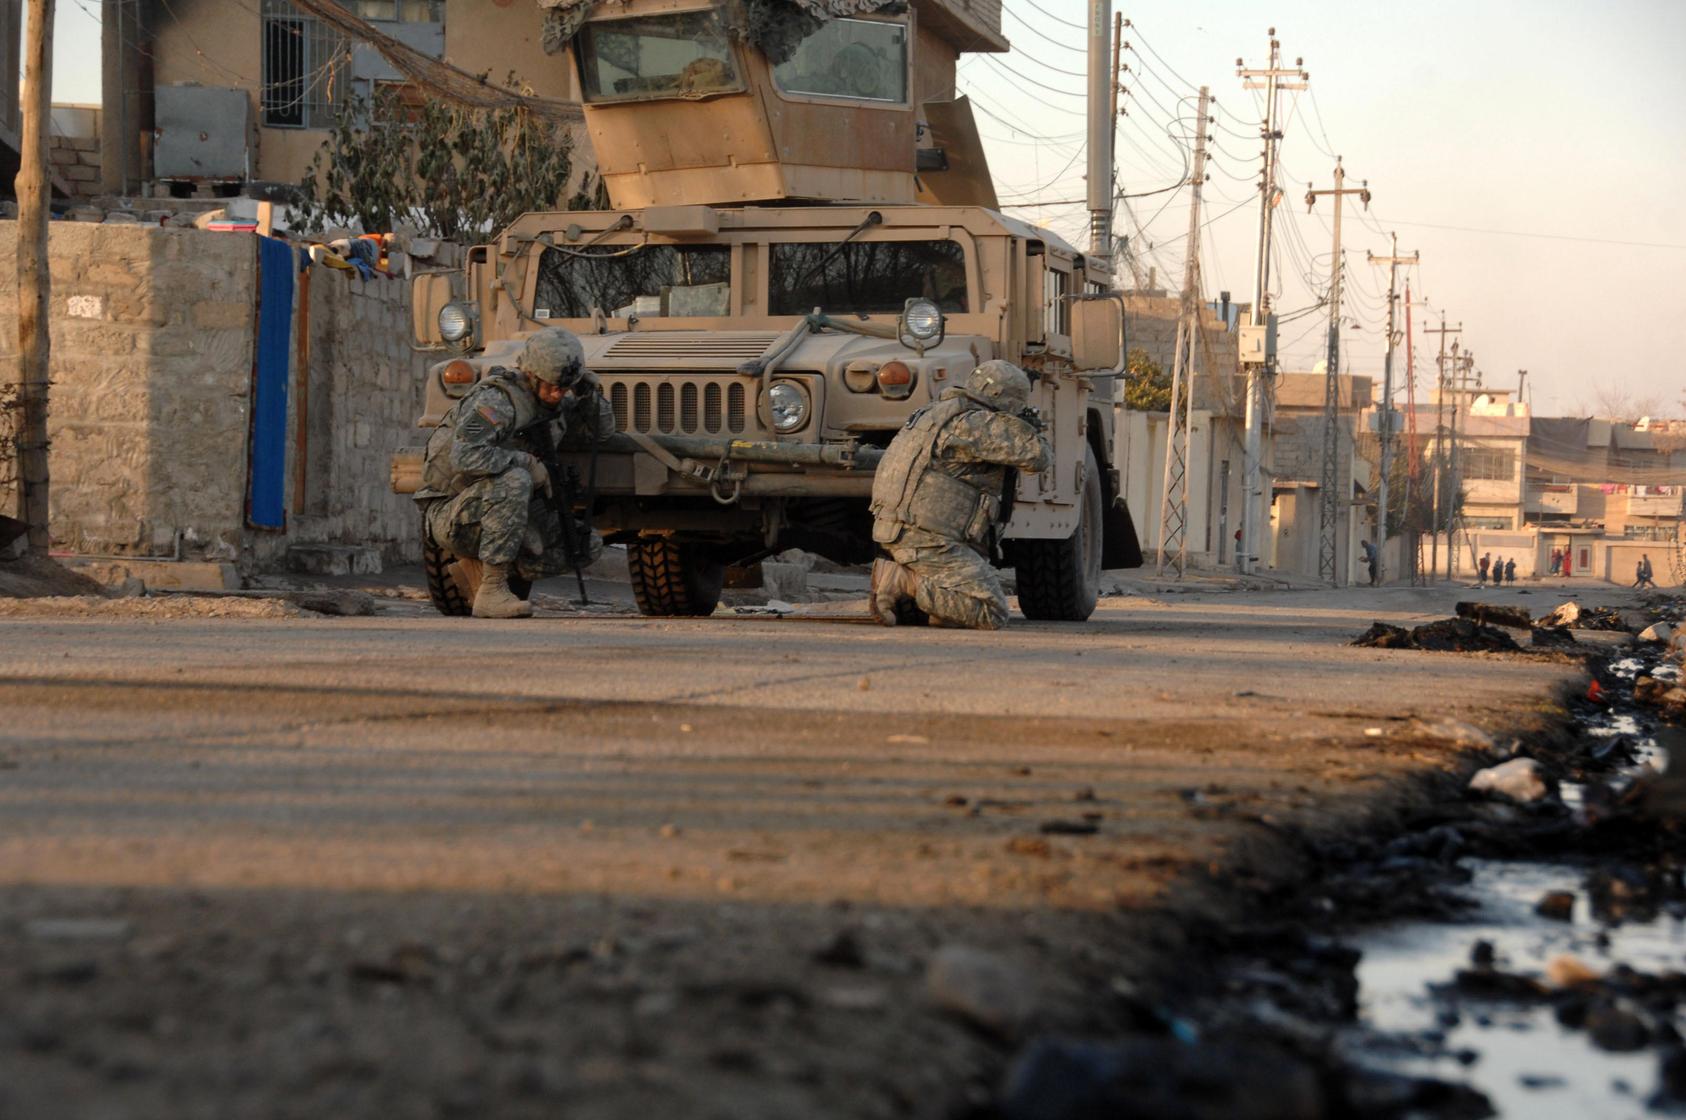 U.S. Army soldiers in Mosul, Iraq. Flickr/U.S. Army